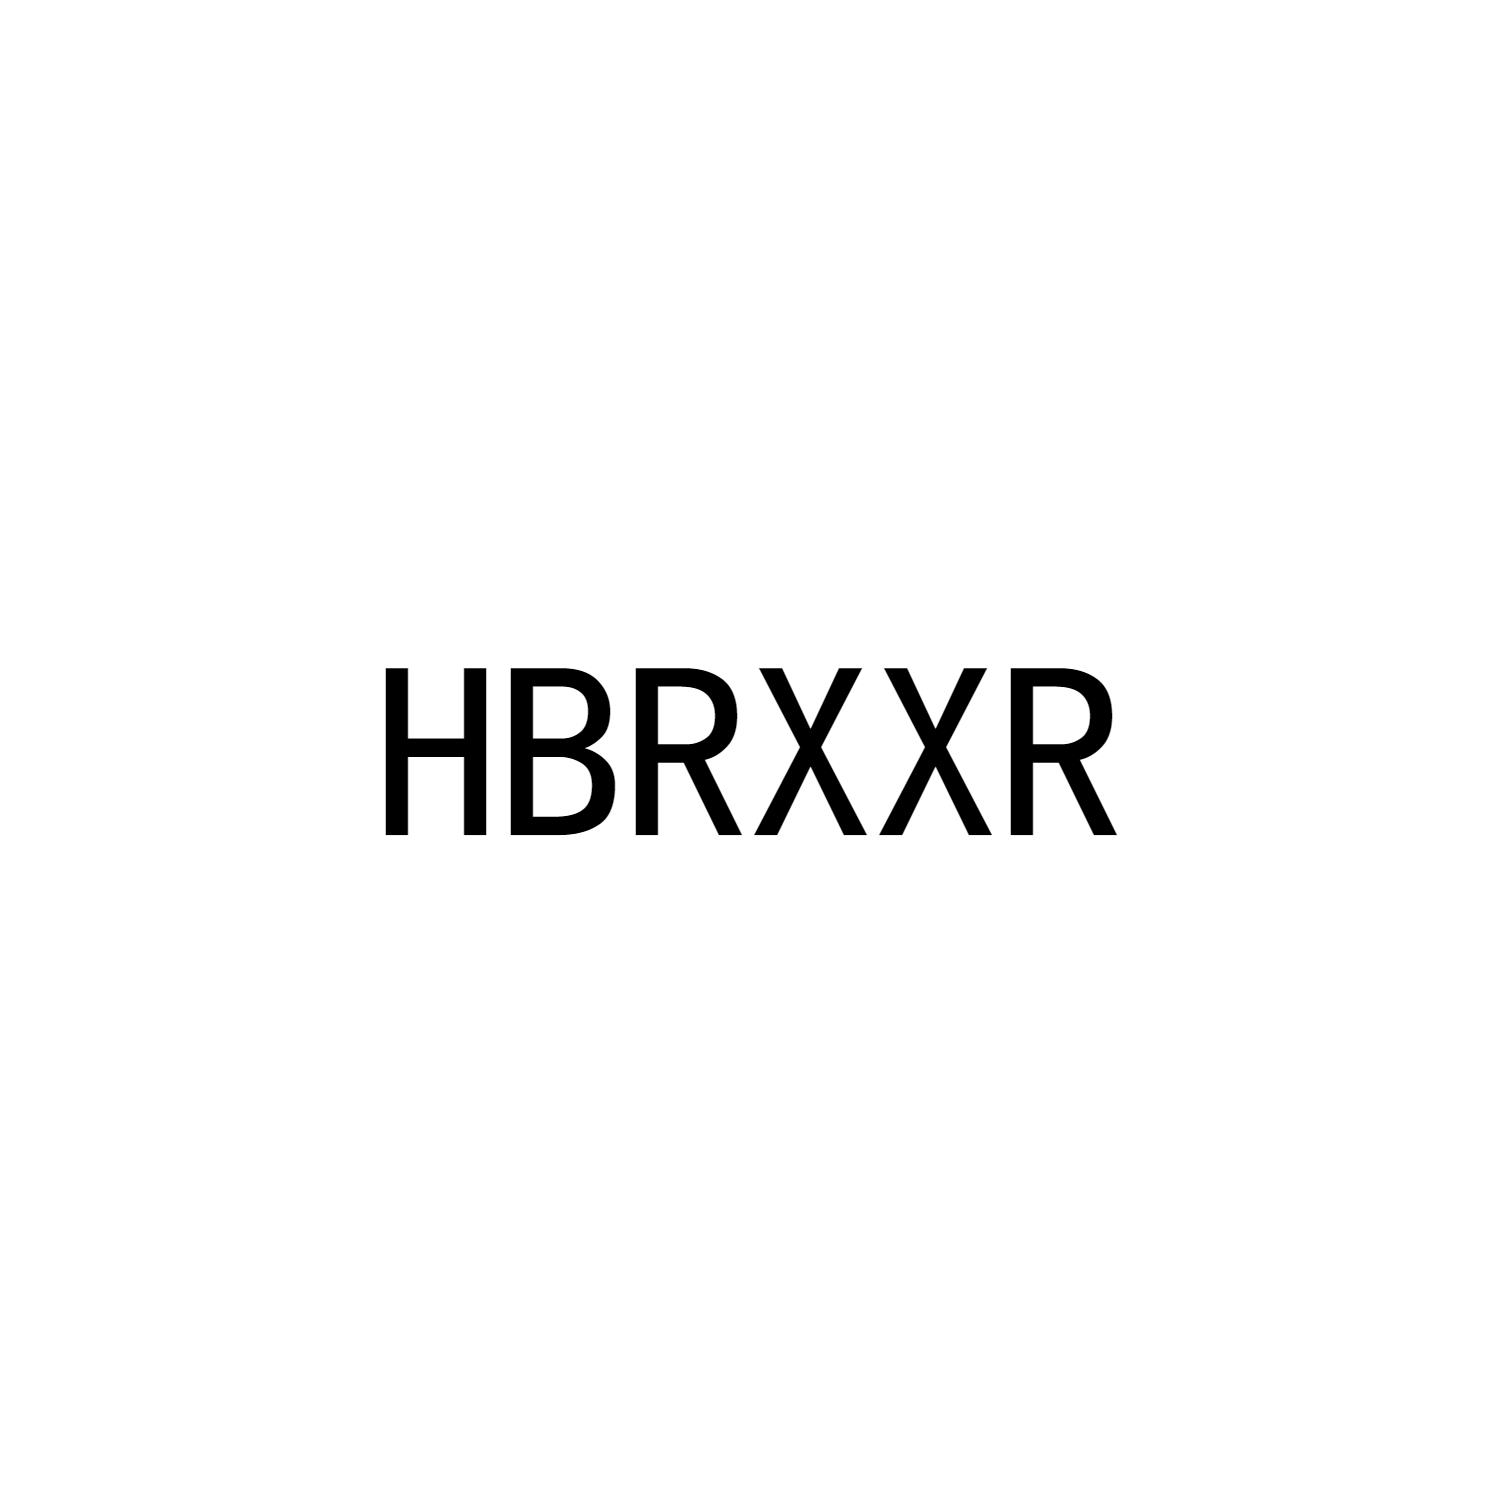 HBRXXR